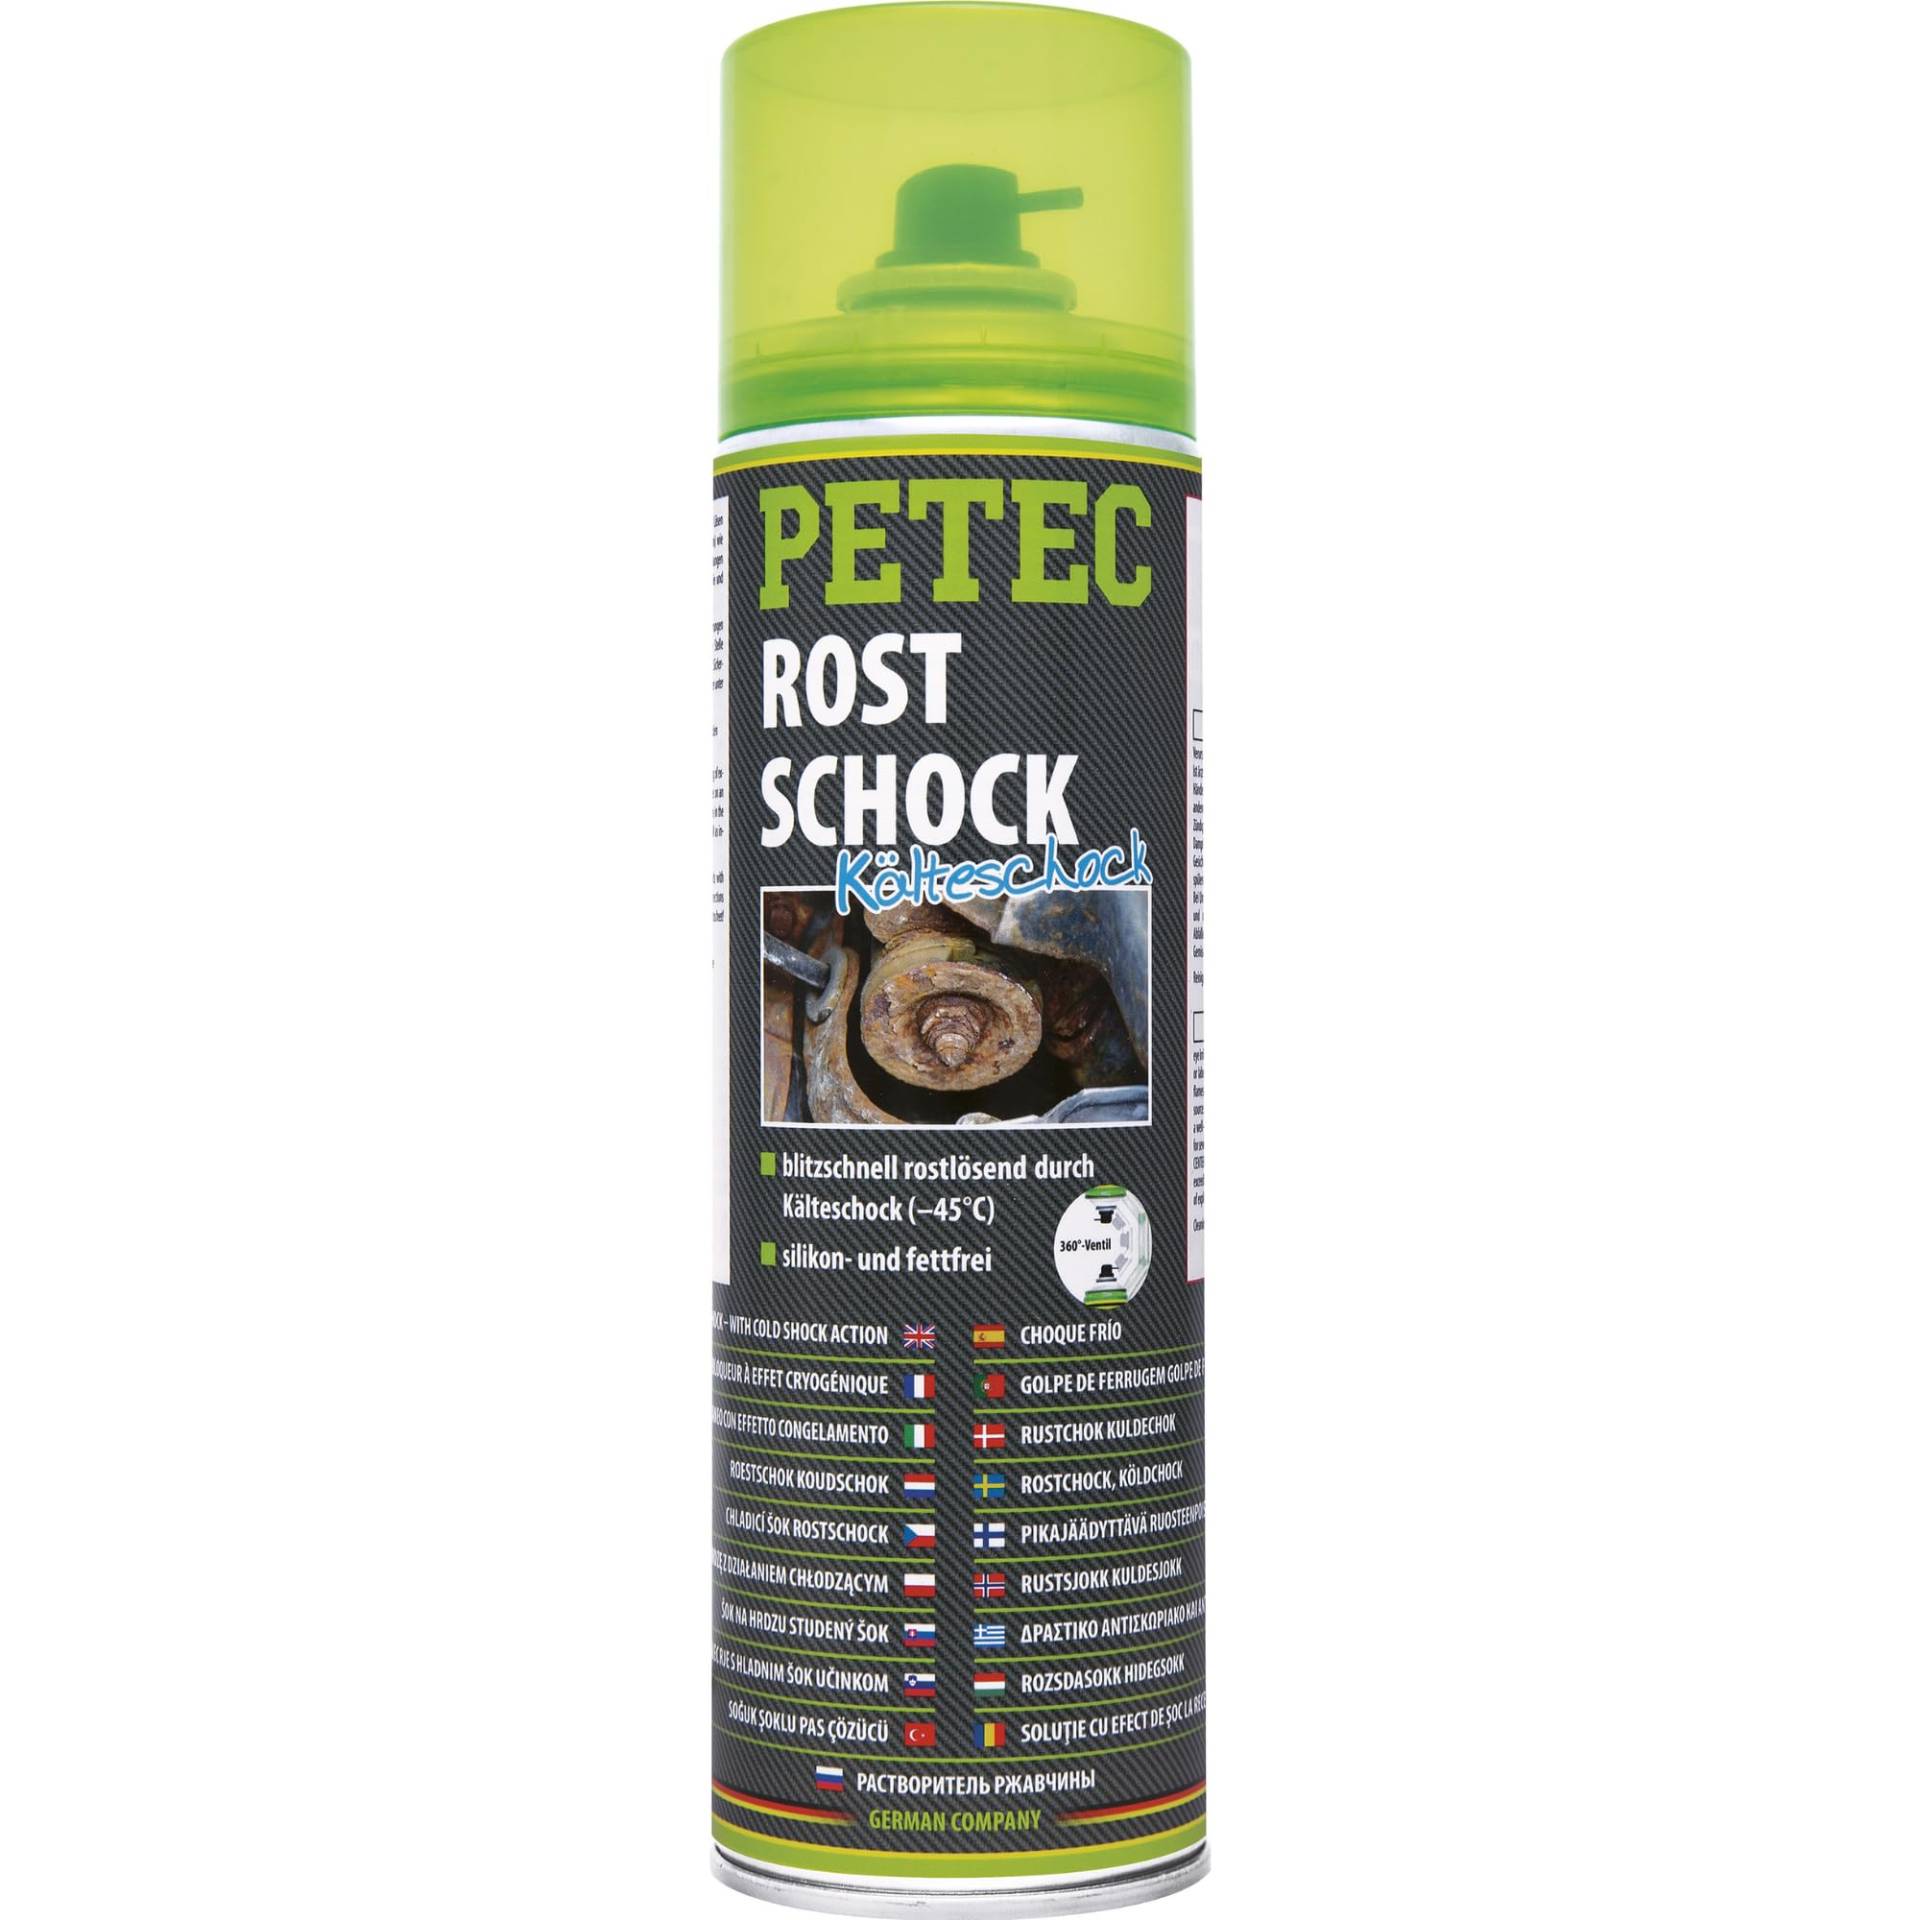 PETEC Rostschock - Kälteschock Spray, 500 ml 70150 von PETEC